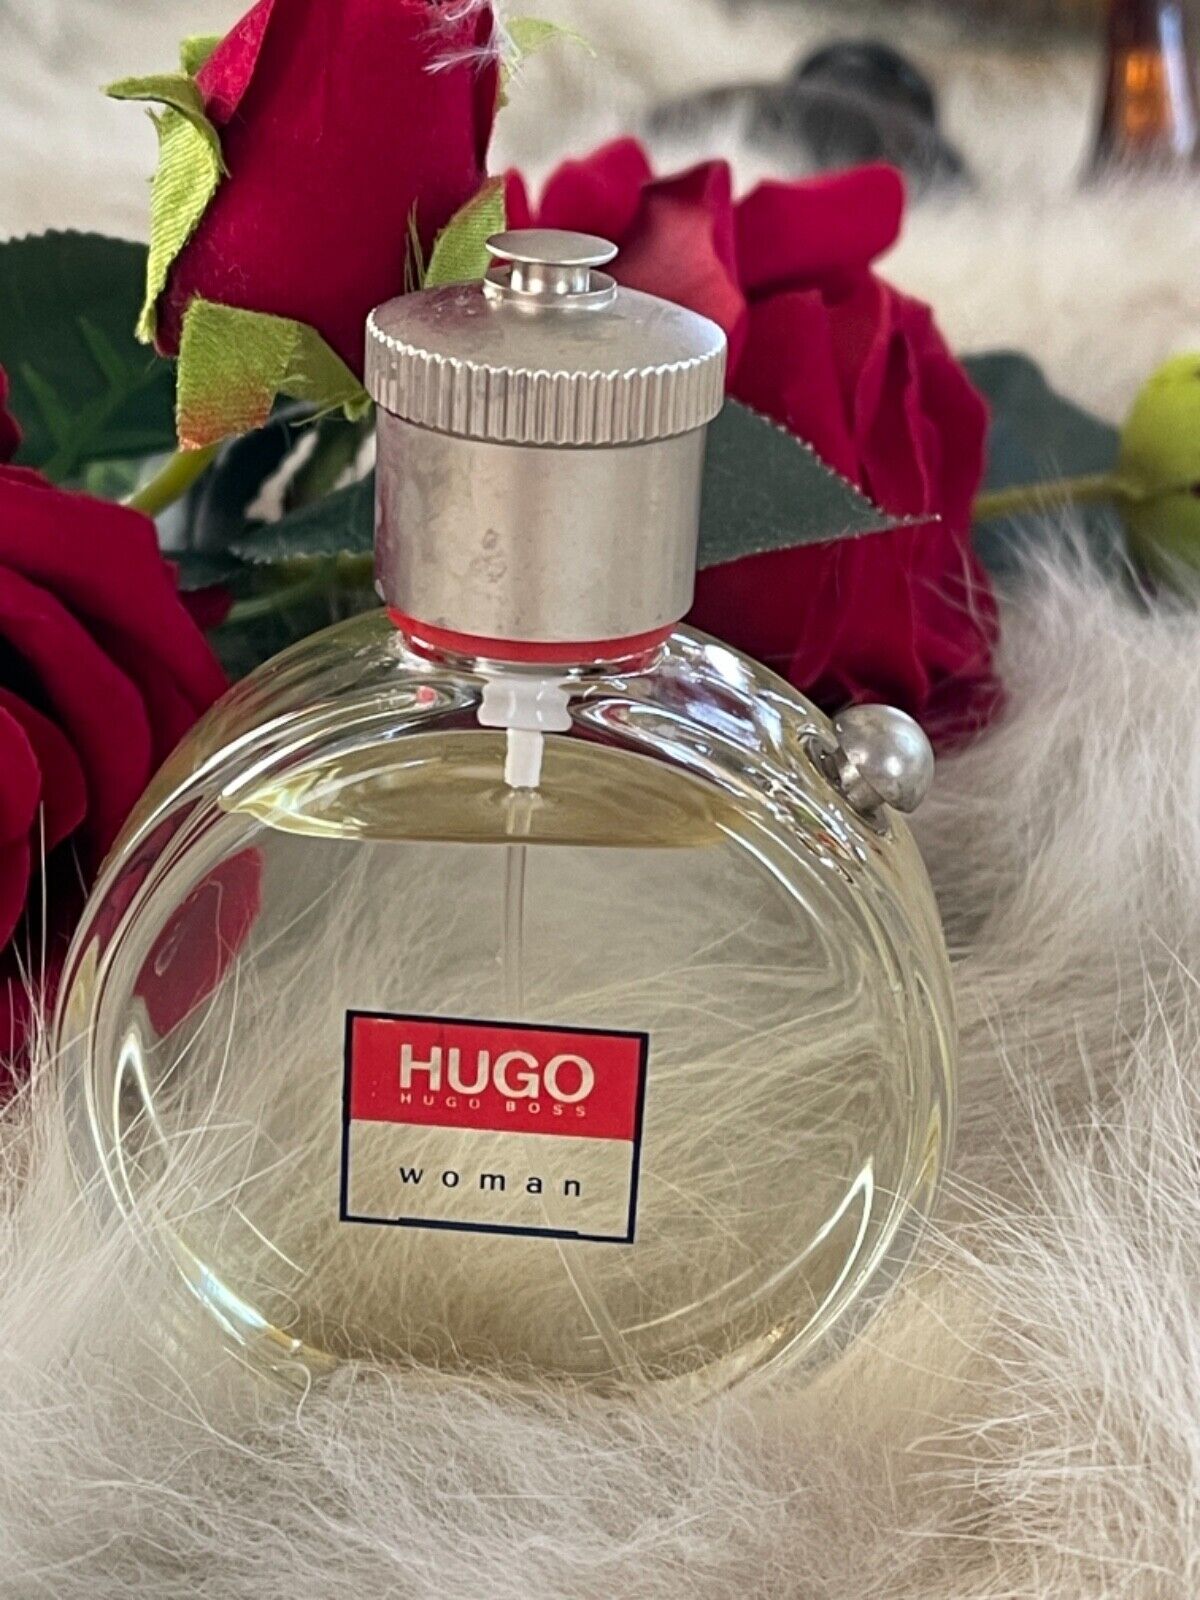 Hugo Boss Hugo Woman 70 ml left  Eau de Toilette Spray EDT Eurocos perfume 